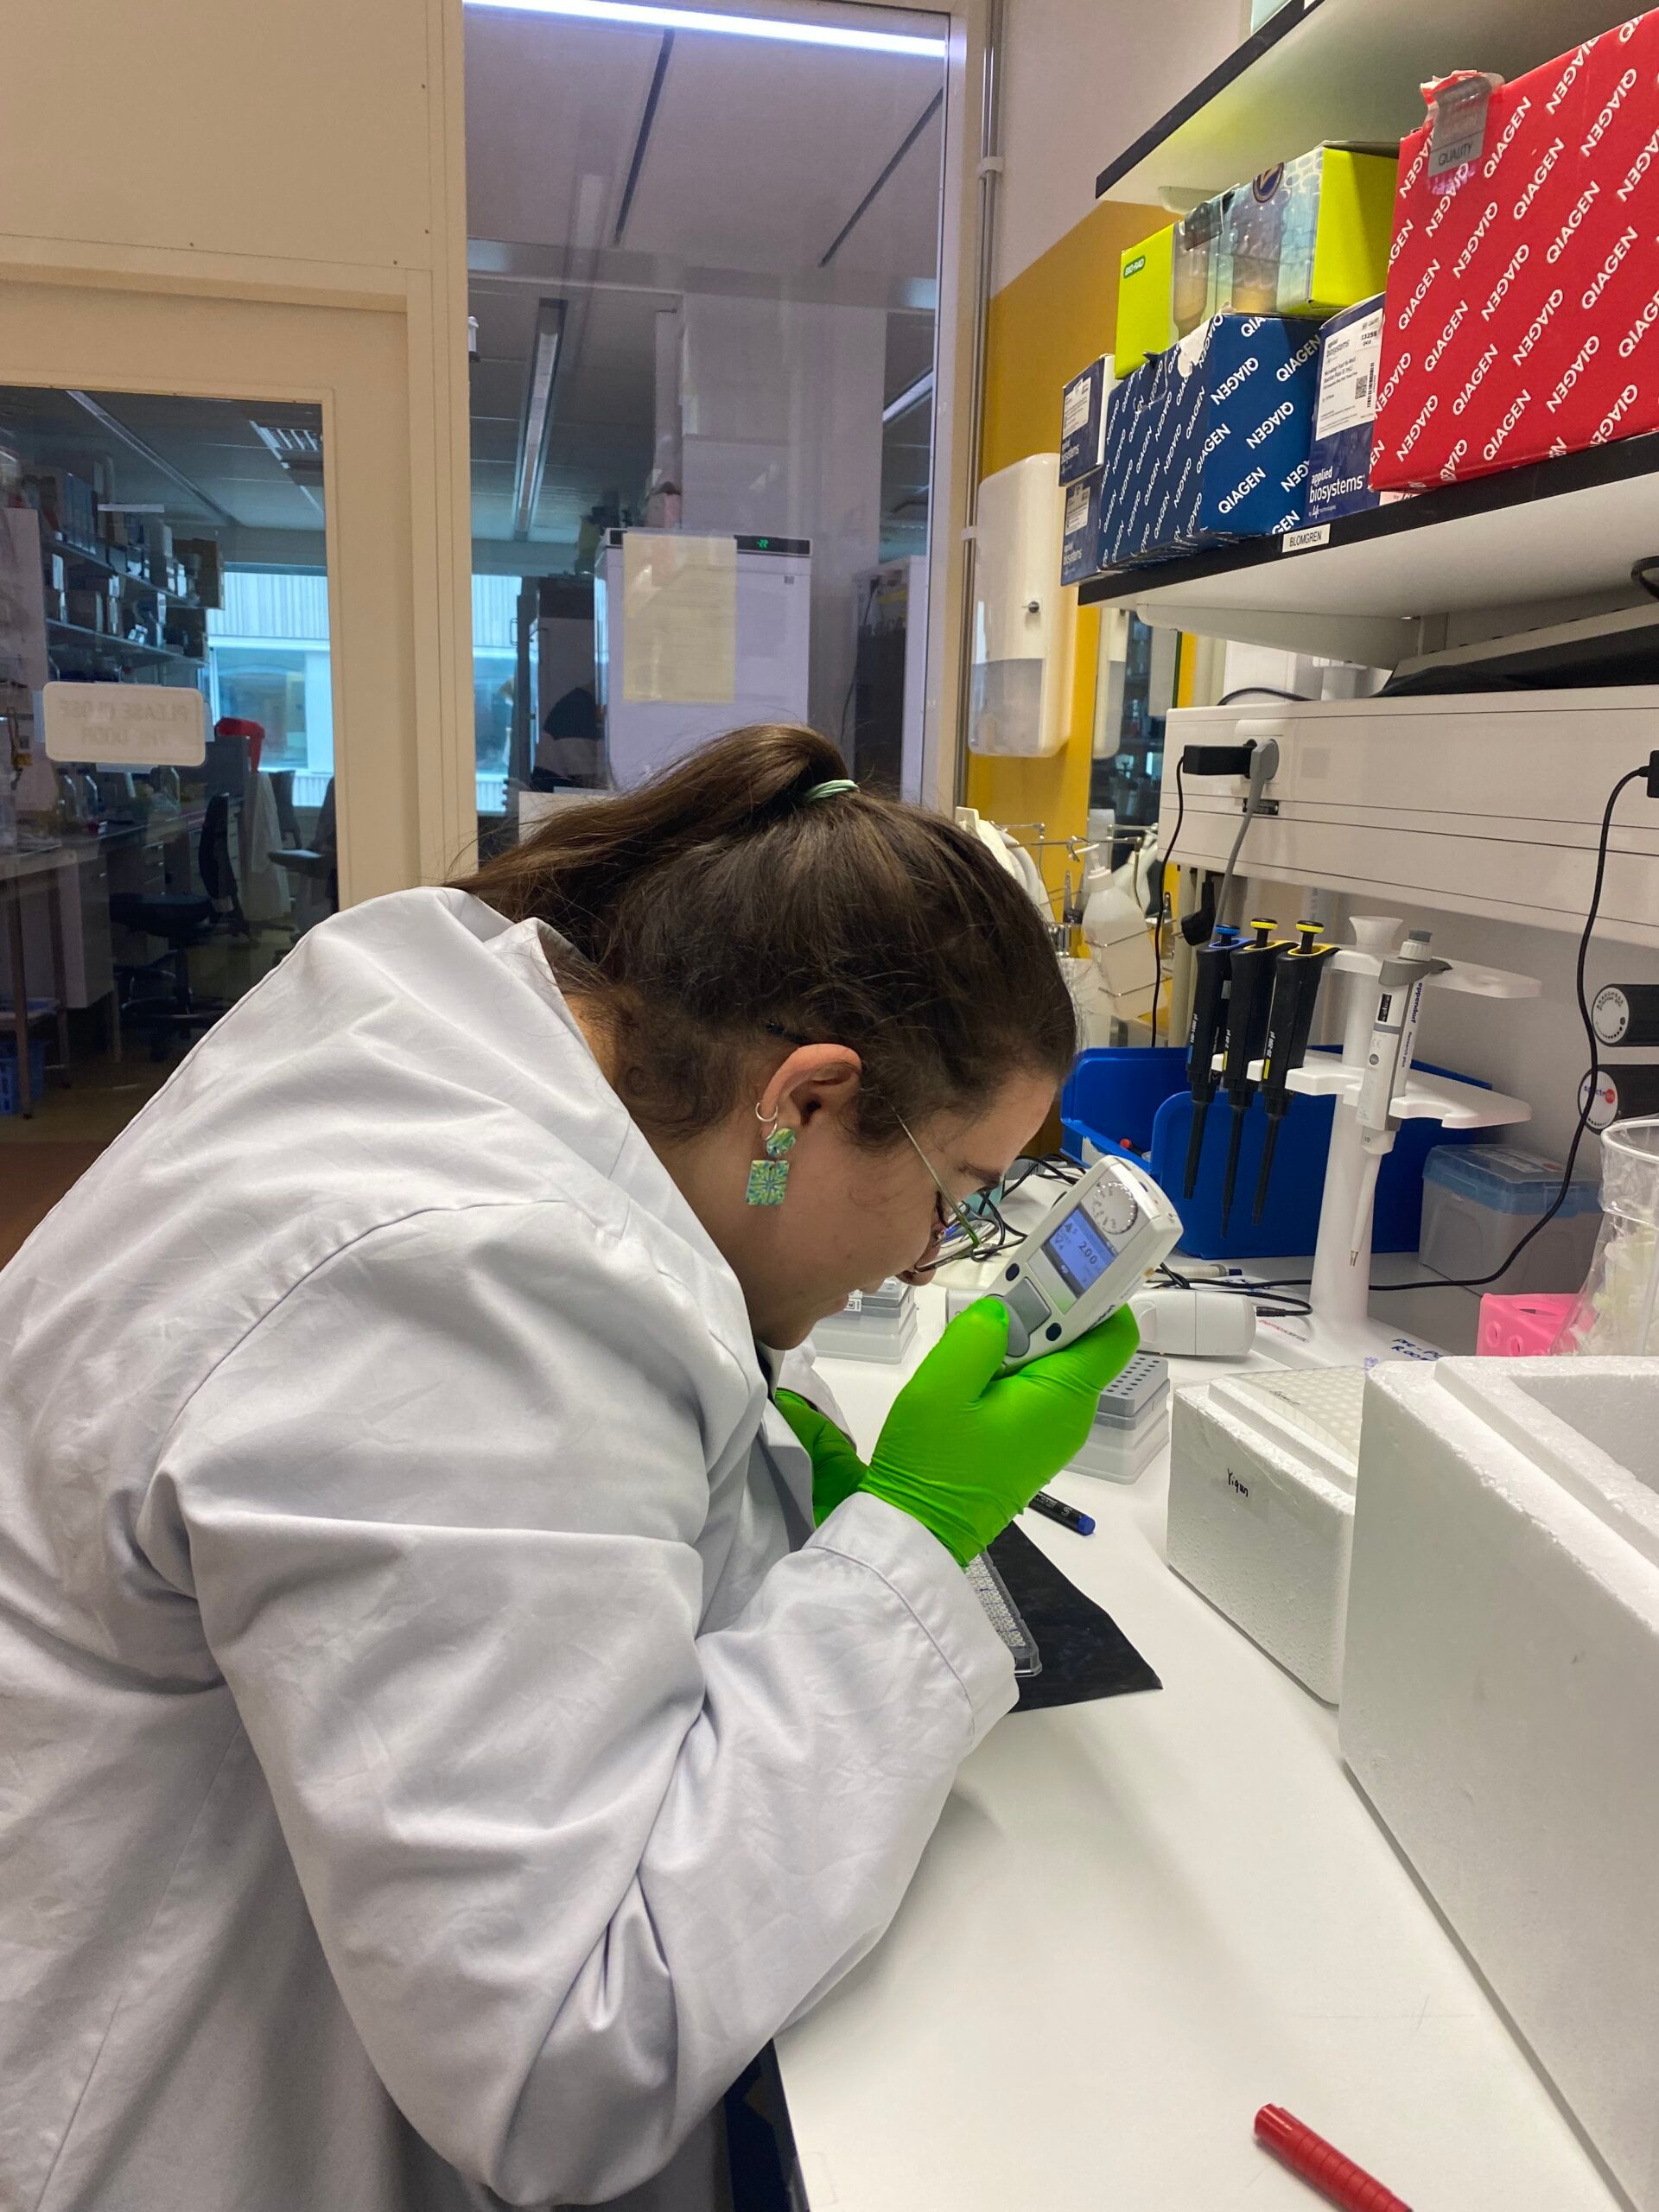 Maria working at the lab at Karolinska Institute in Stockholm